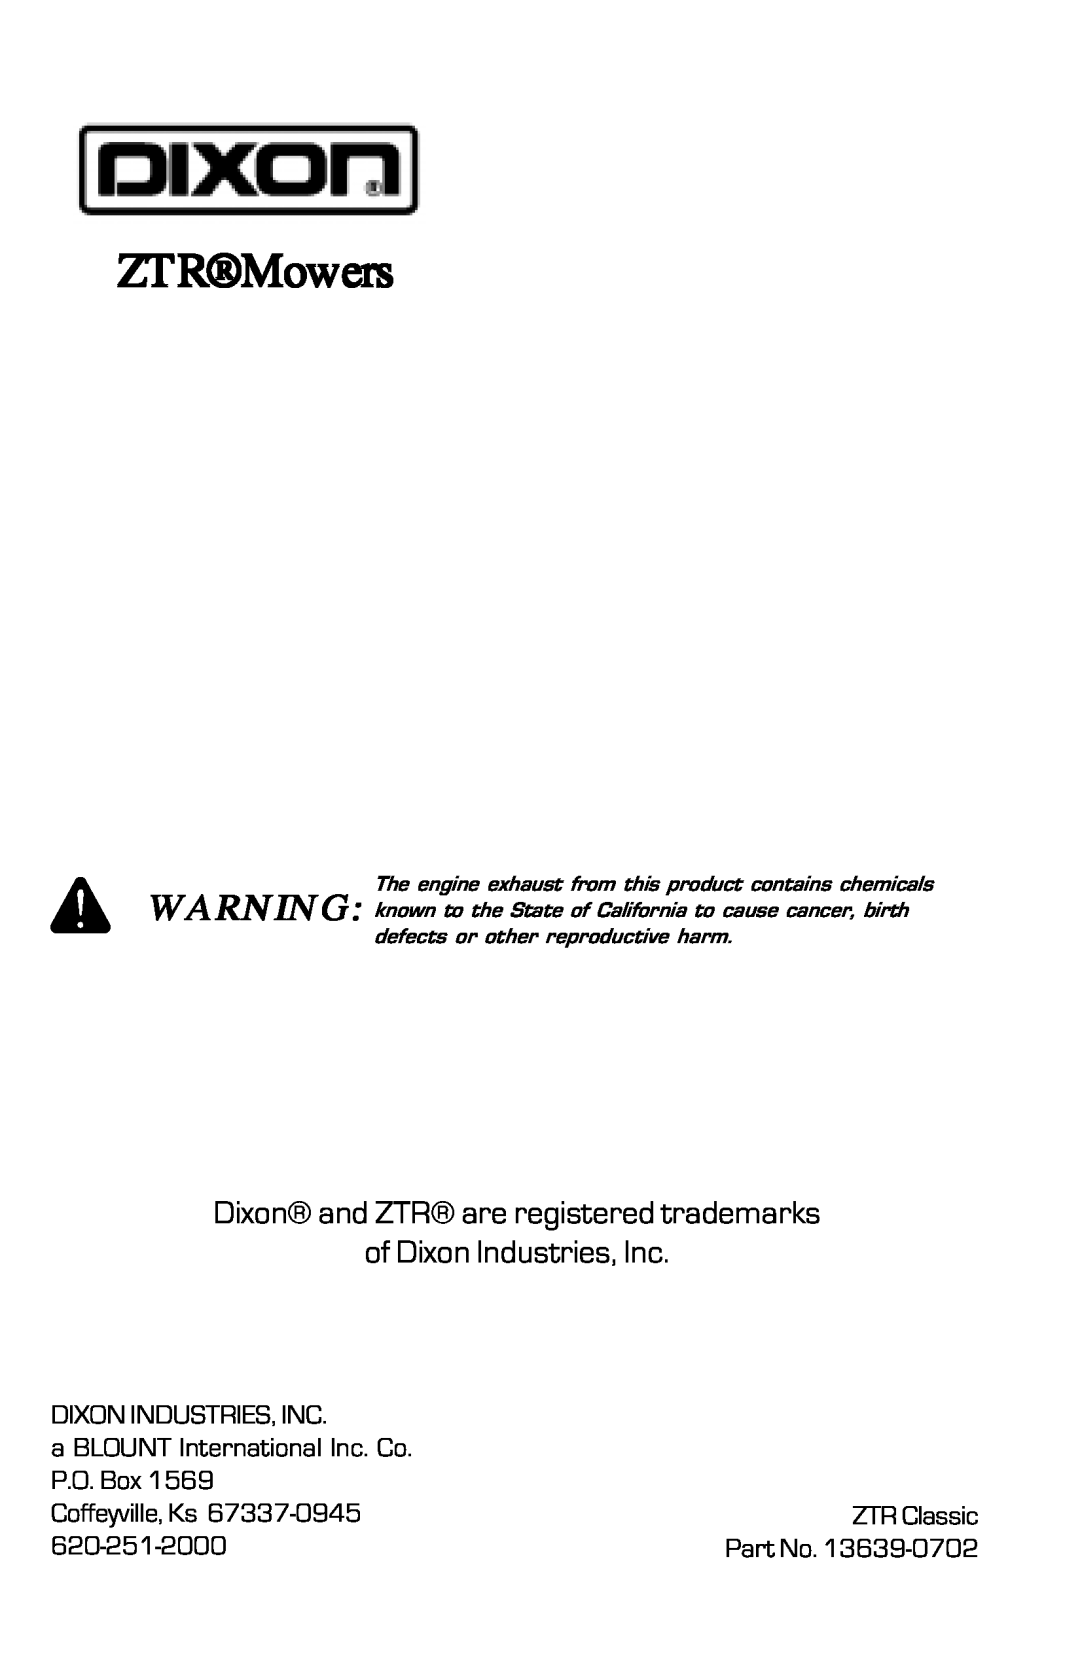 Dixon ZTRCLASSIC manual ZTRMowers, Dixon and ZTR are registered trademarks of Dixon Industries, Inc, ZTR Classic Part No 